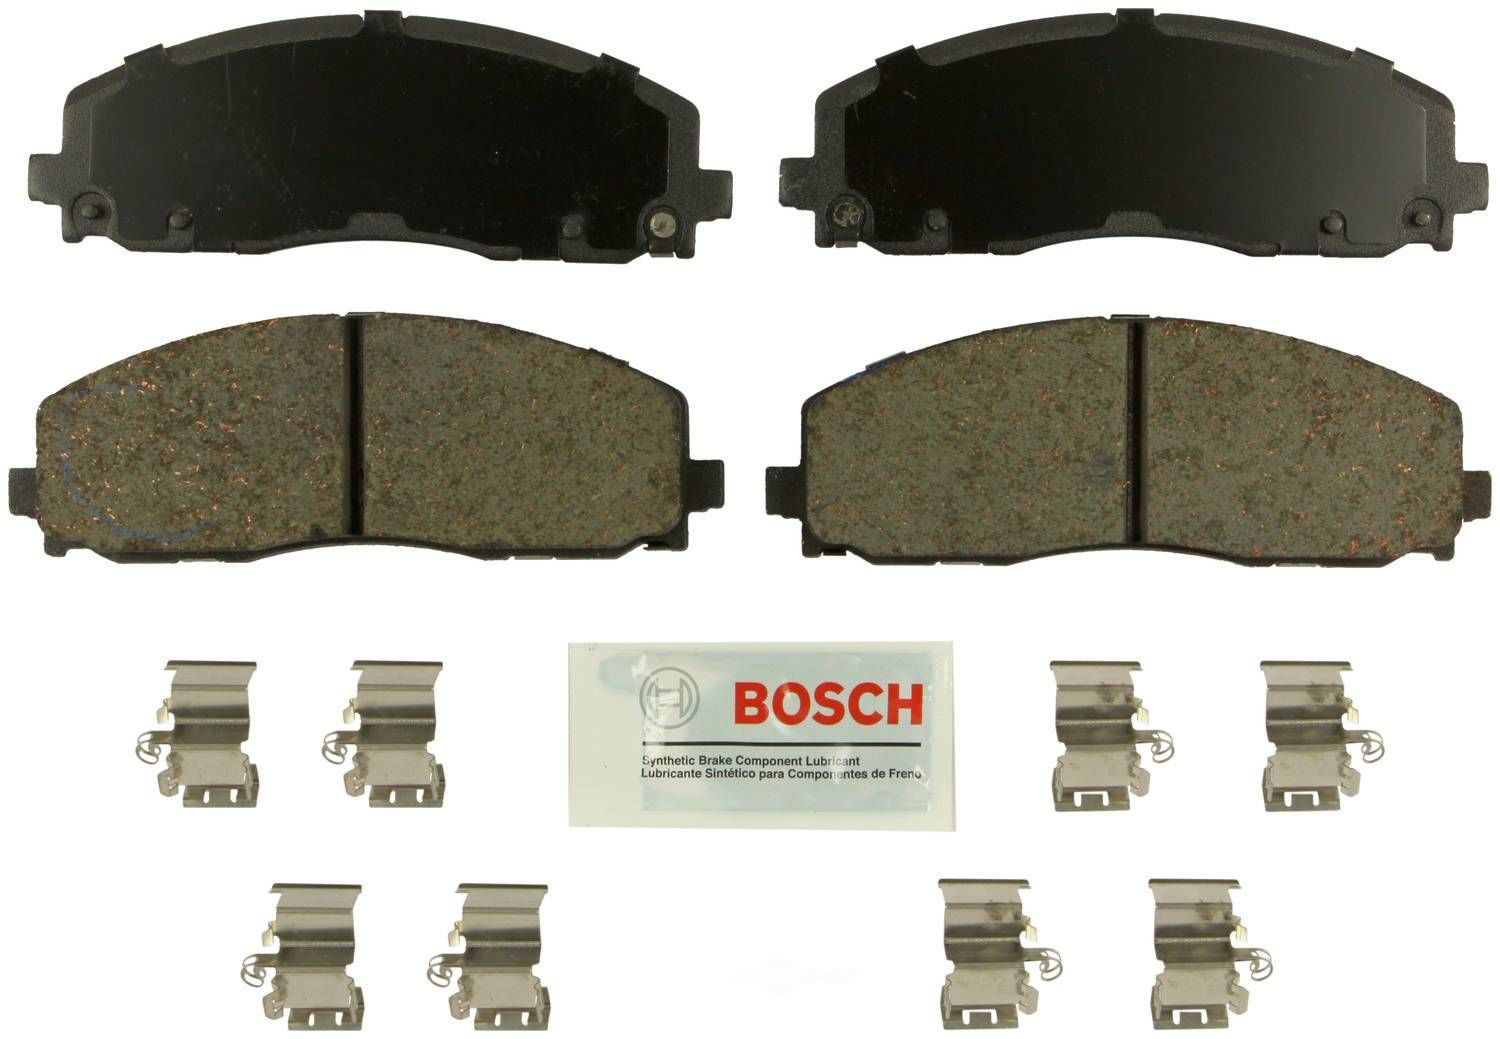 BOSCH BRAKE - Bosch Blue Ceramic Brake Pads with Hardware (Front) - BQC BE1589H